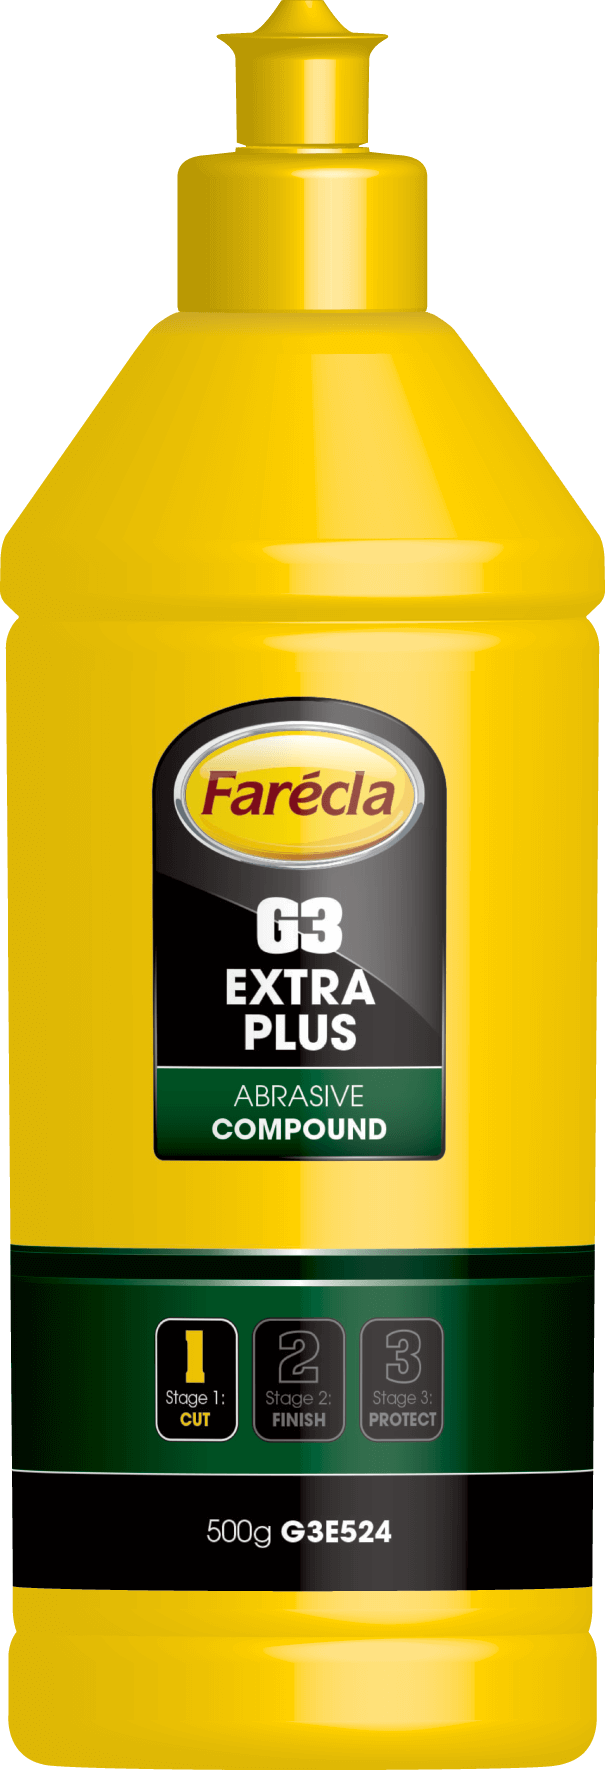 FARECLA G3 EXTRA PLUS 500G